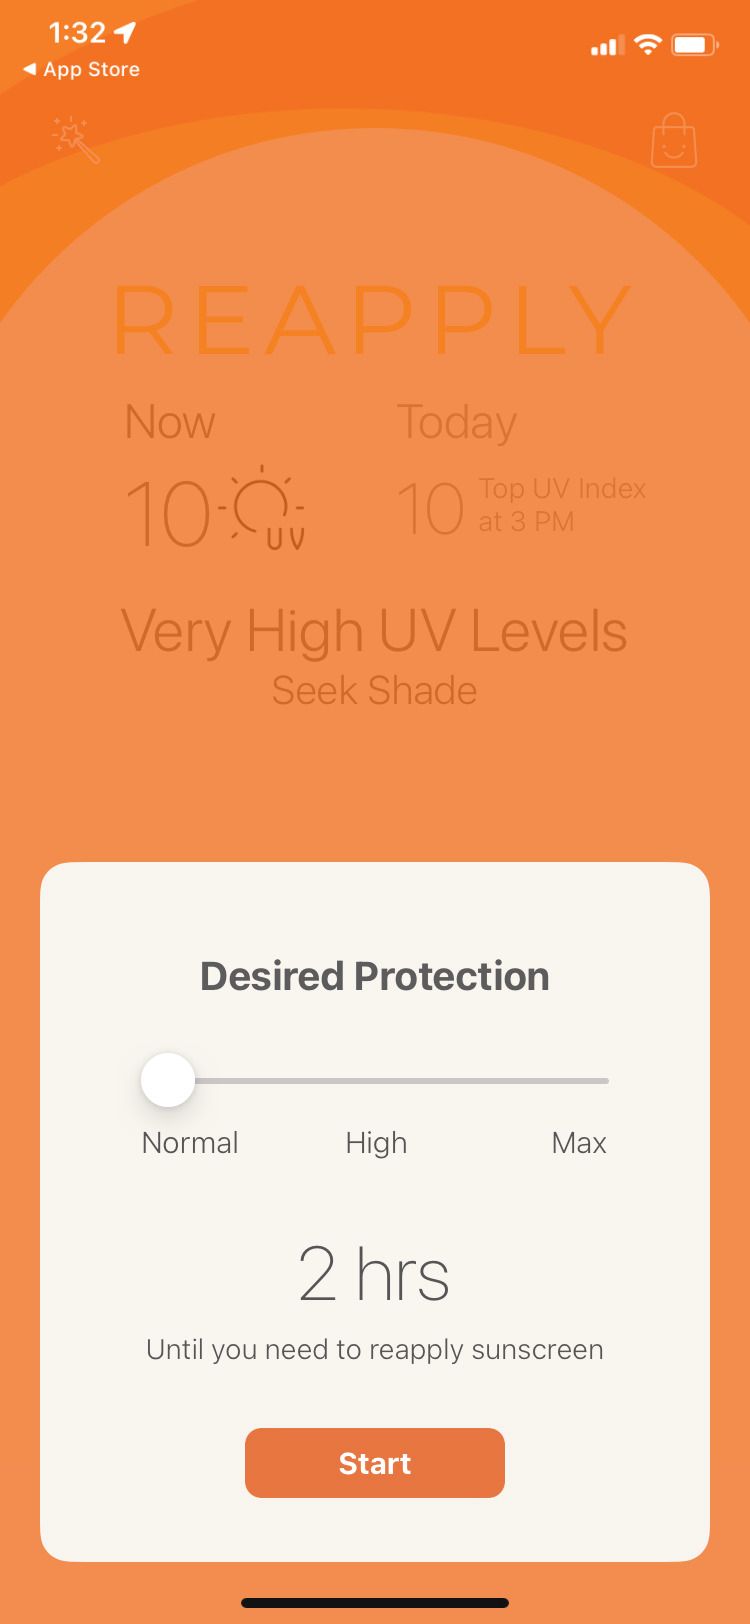 REAPPLY app sun protection